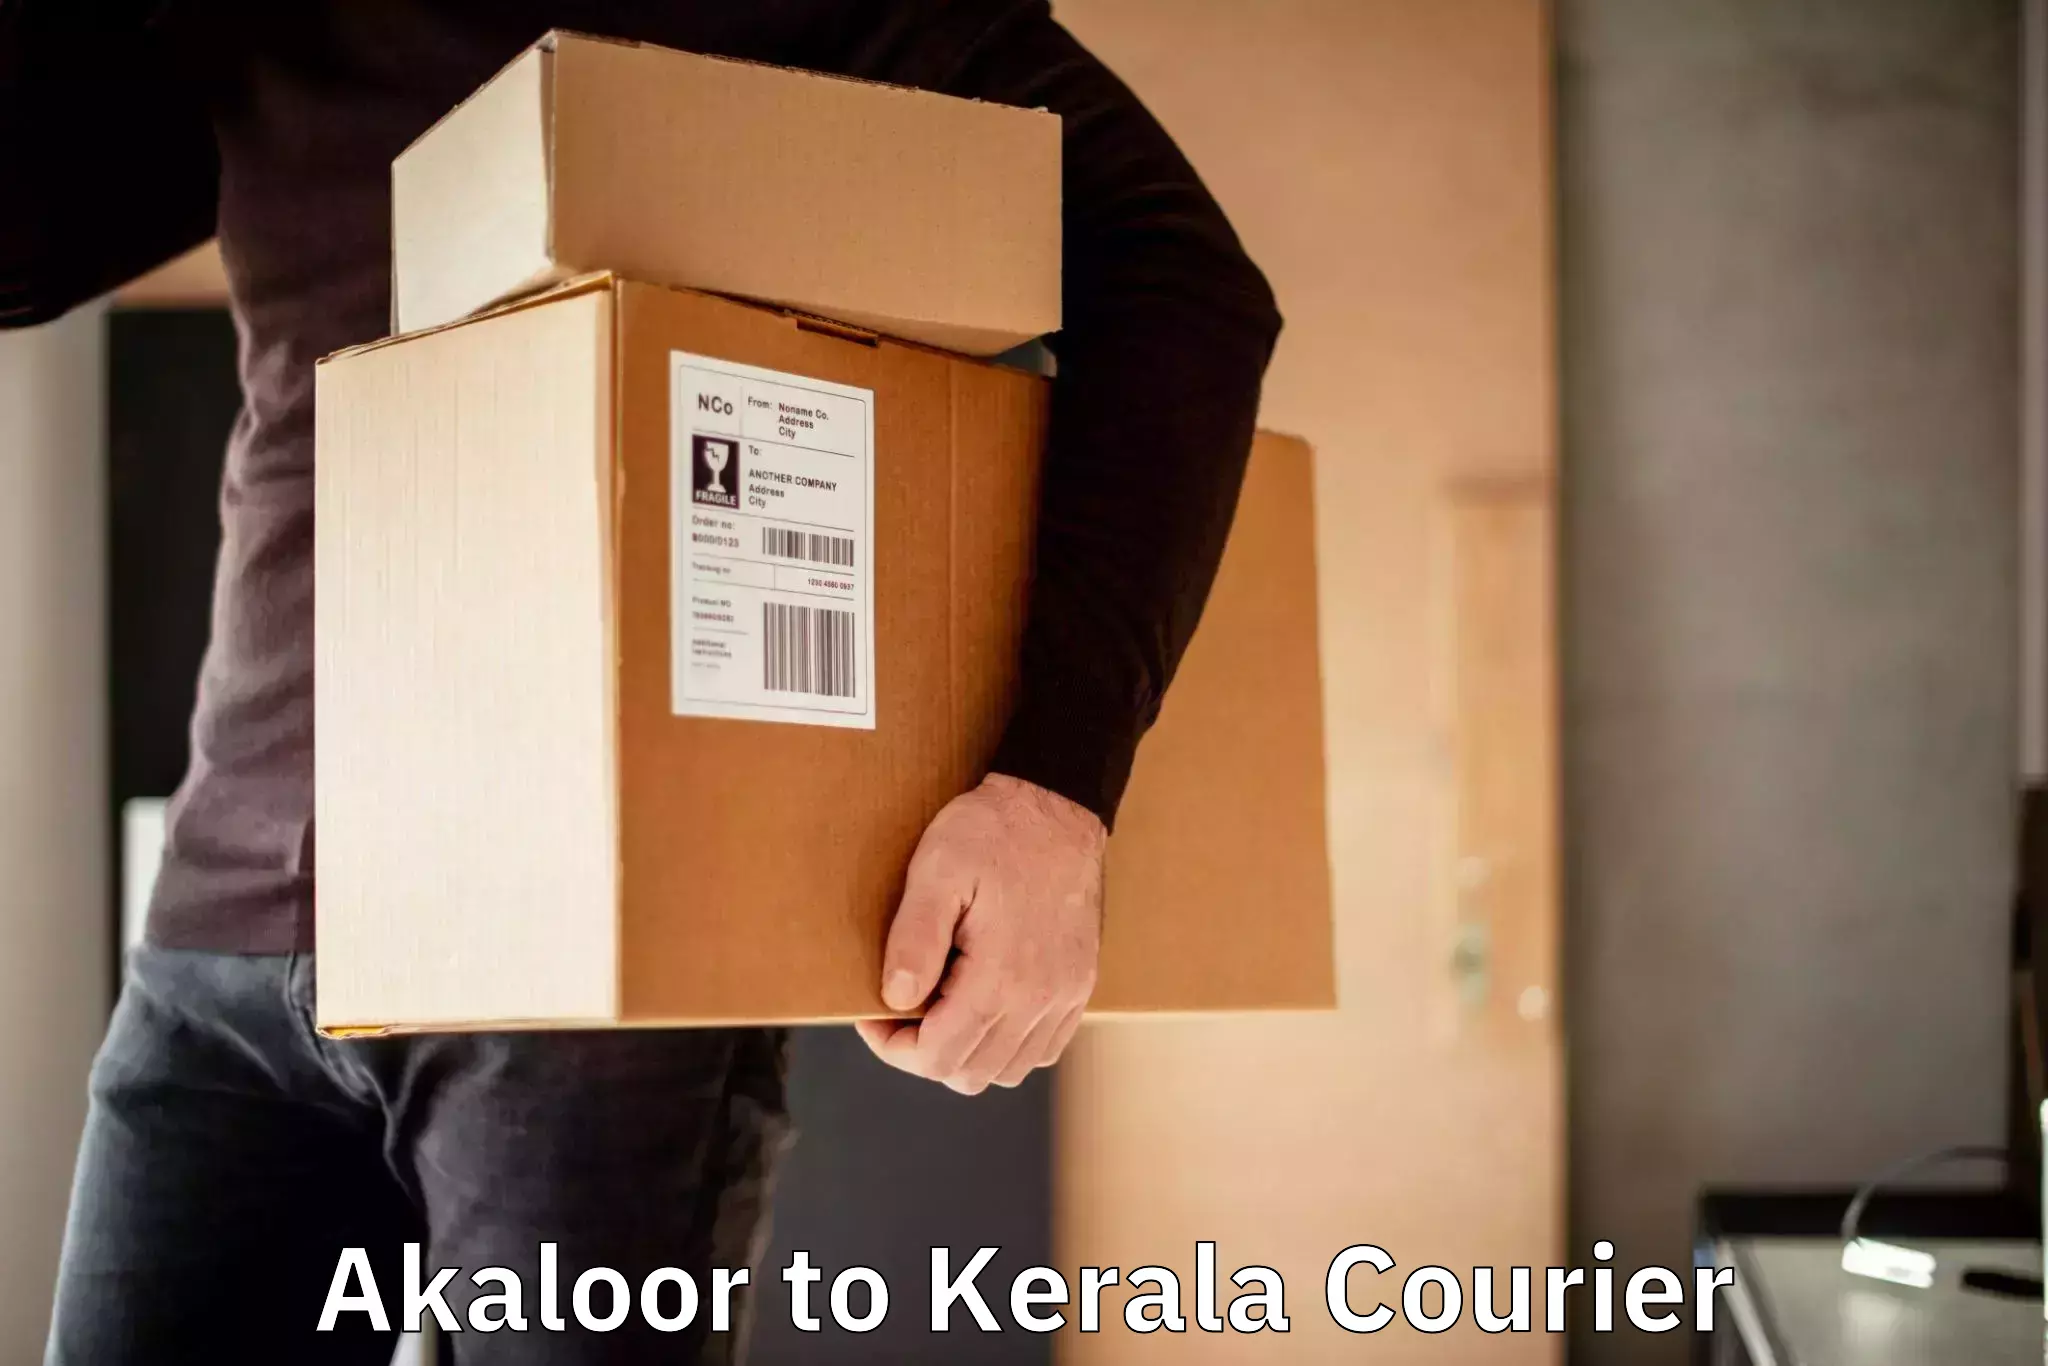 Express delivery capabilities Akaloor to Kerala